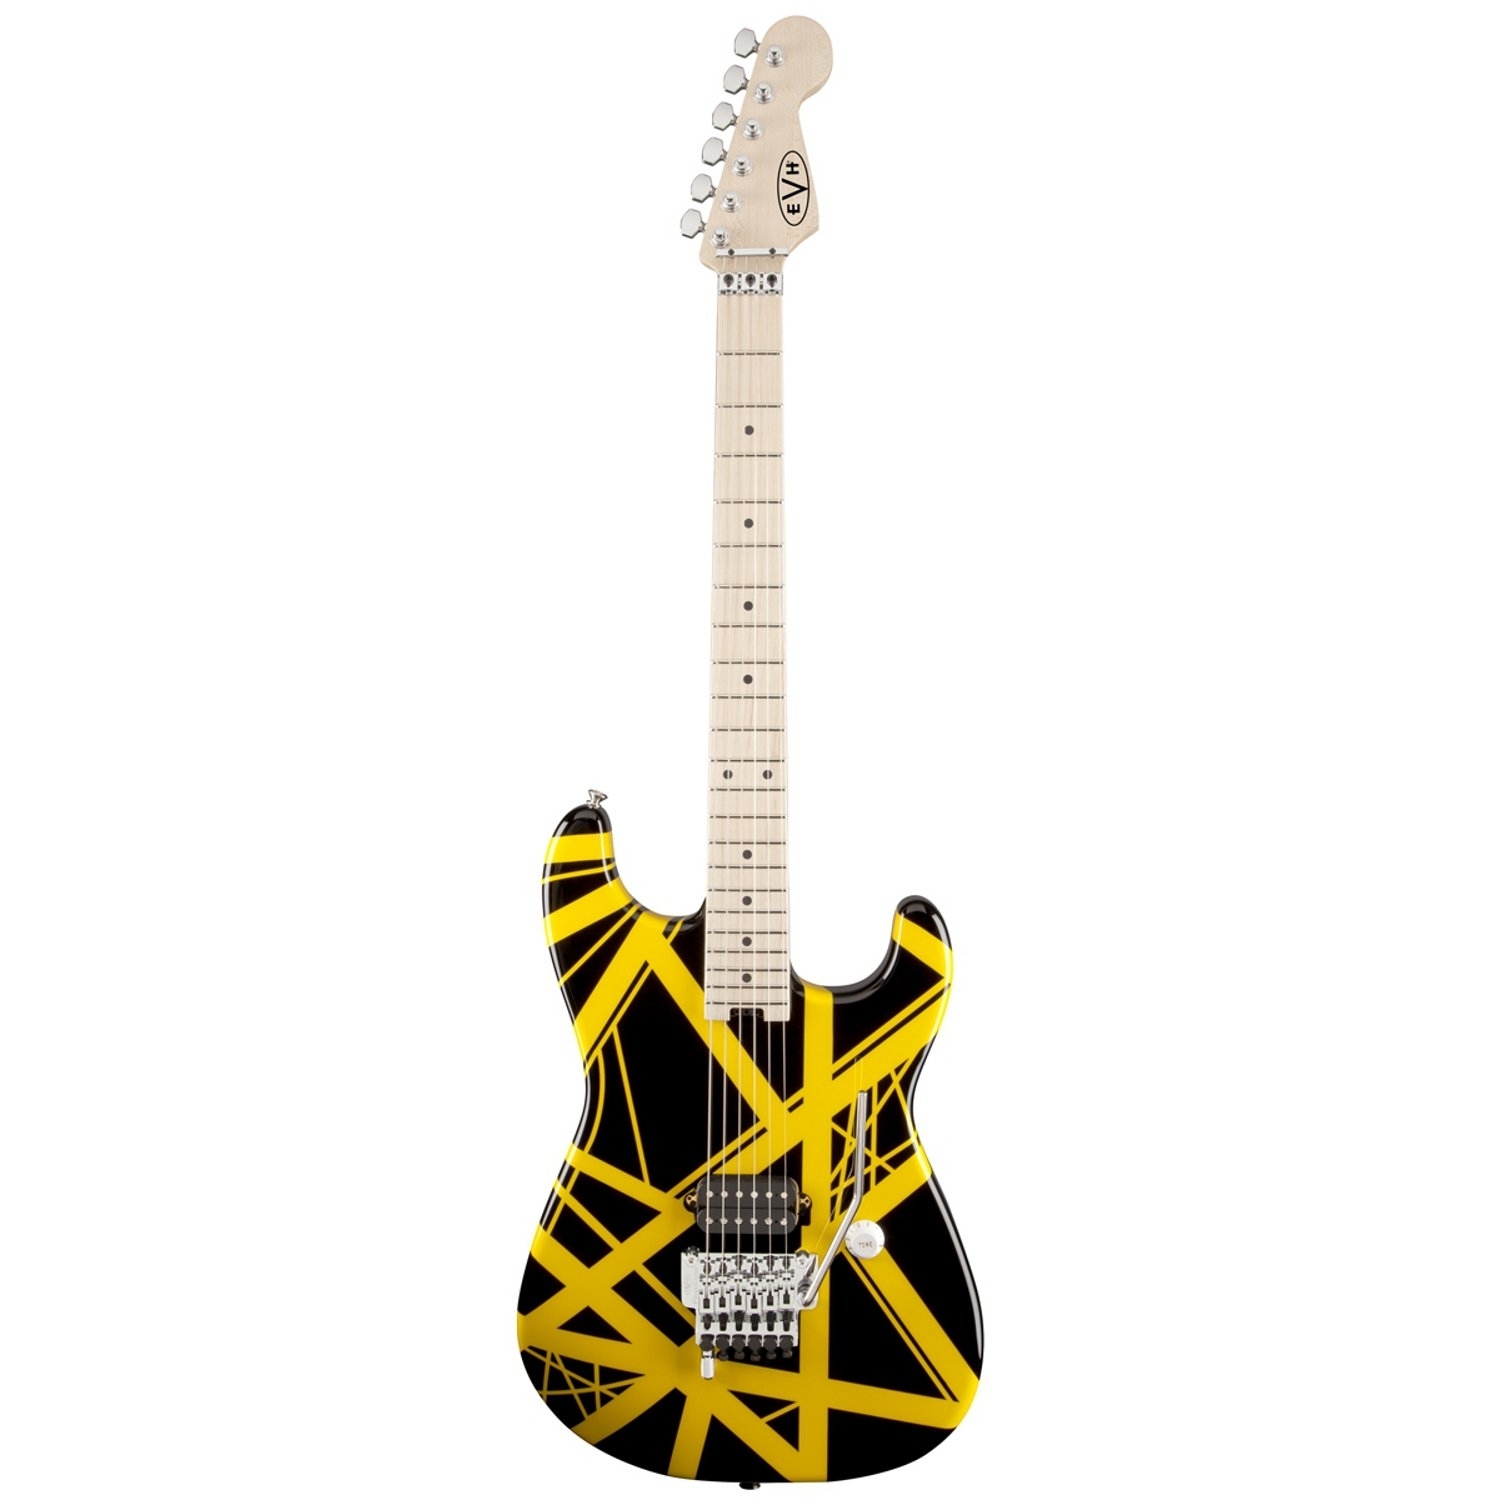 EVH Striped Serie elektrische gitaar geel-zwart